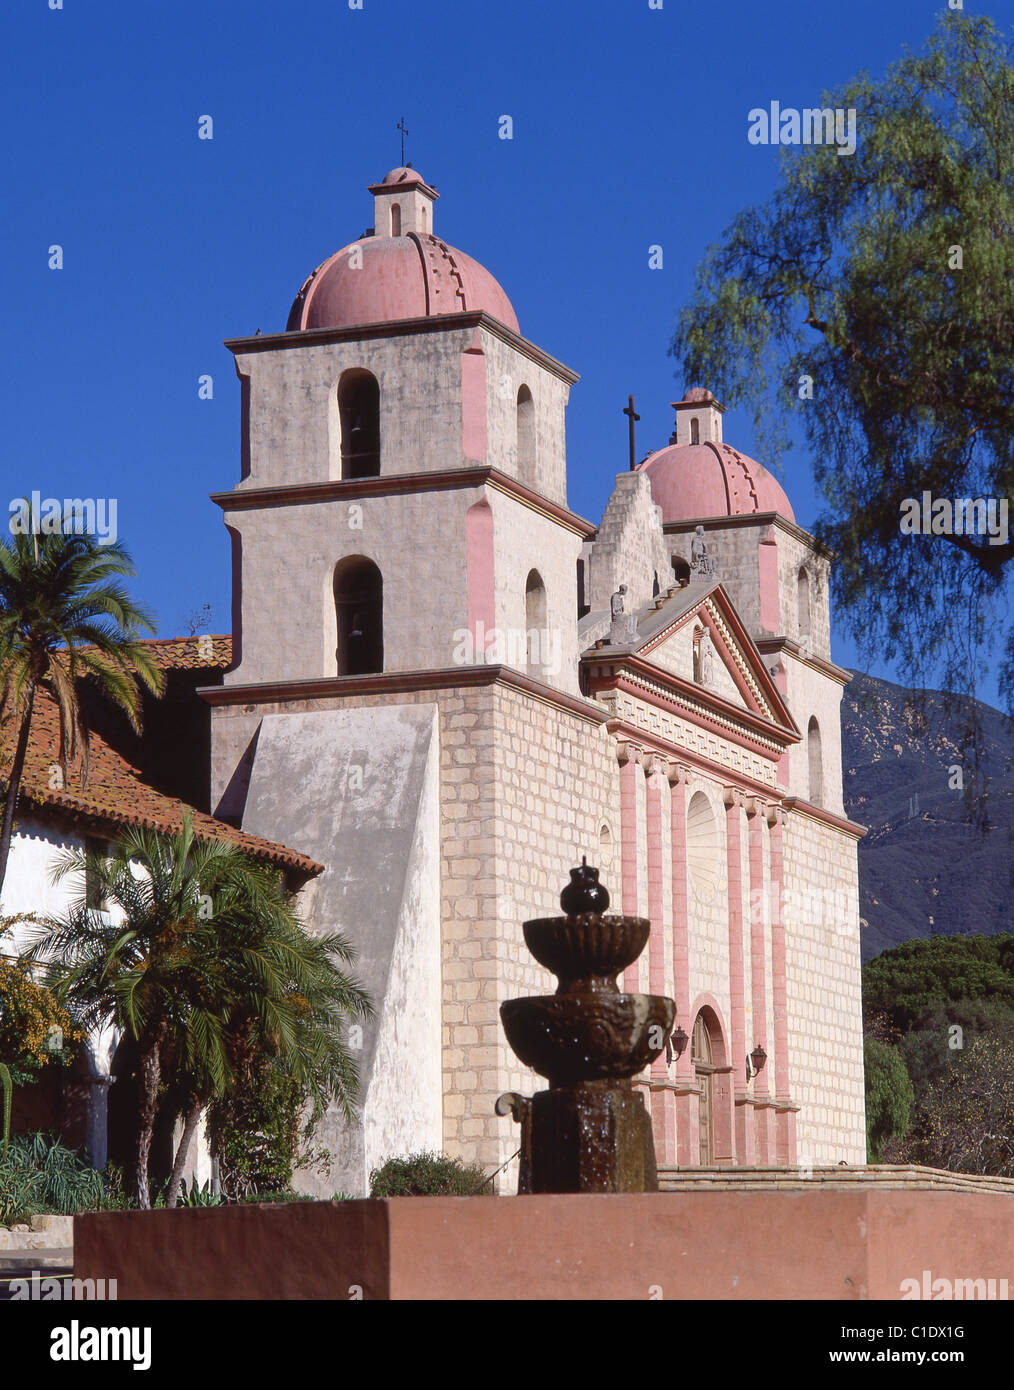 The Chapel and fountain at Santa Barbara Mission, Santa Barbara, California, United States of America Stock Photo